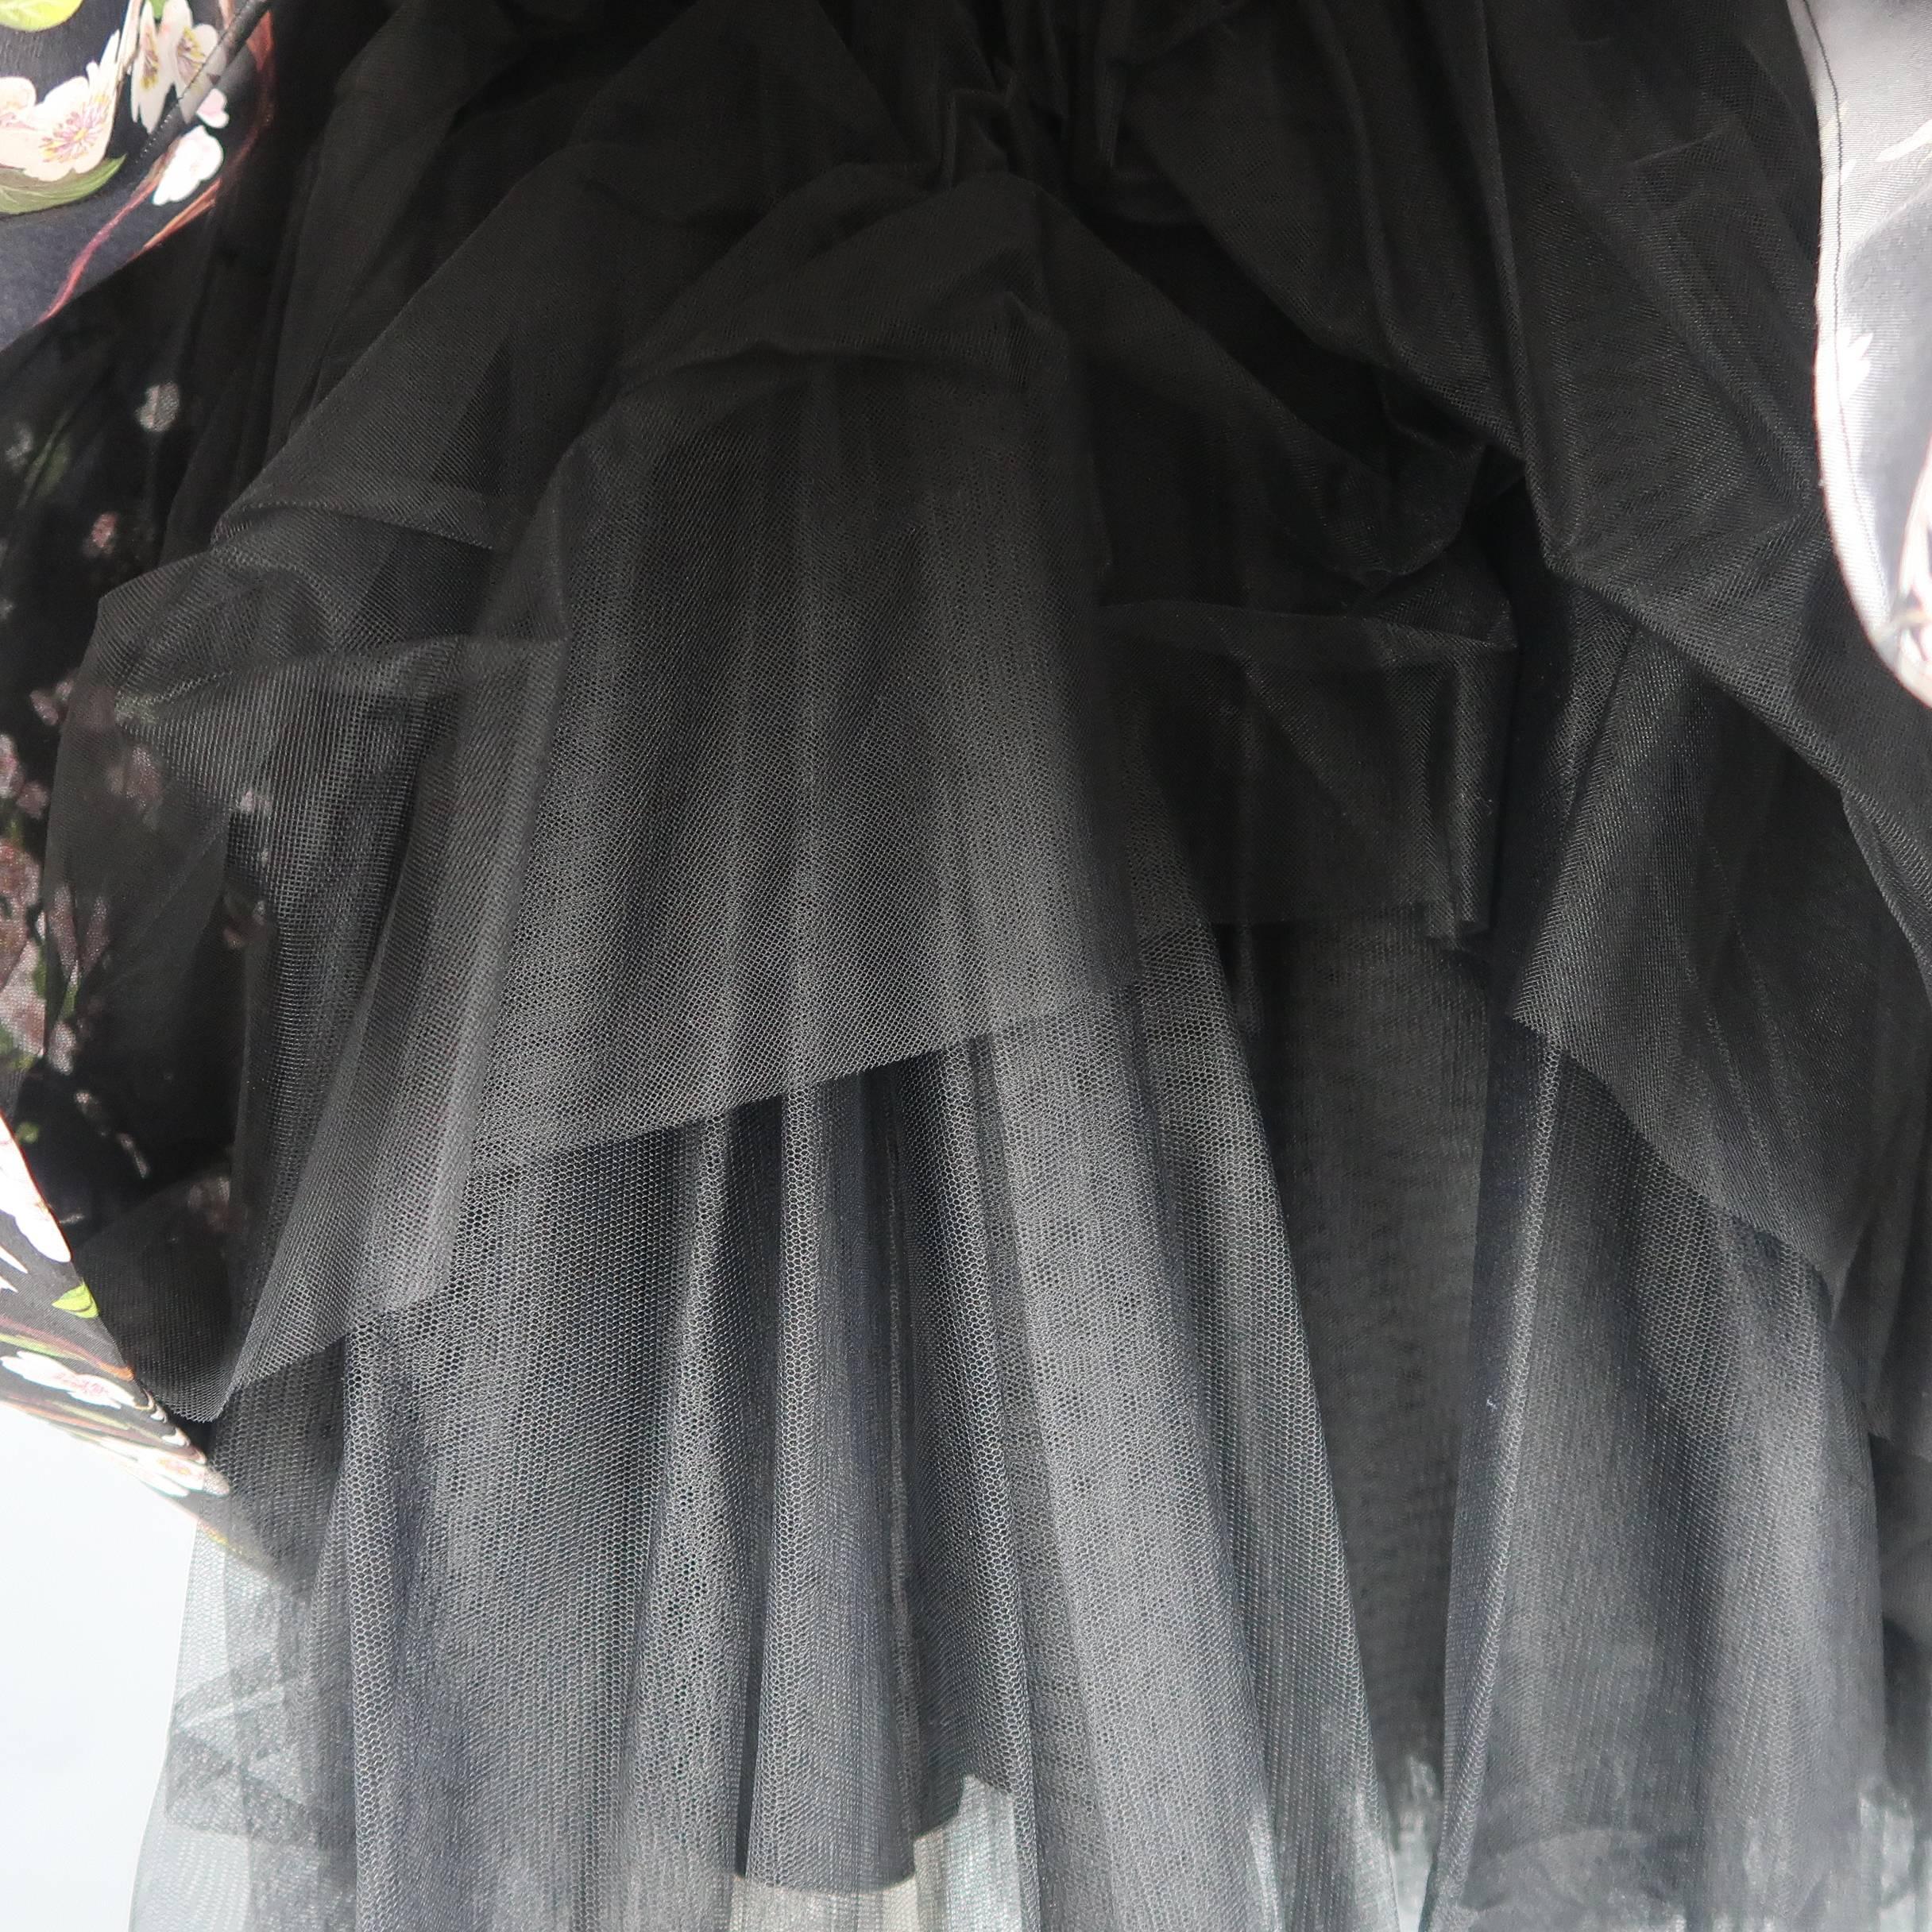 Dolce & Gabbana Dress -  Black Cherry Blossom Cocktail Dress Gown 2